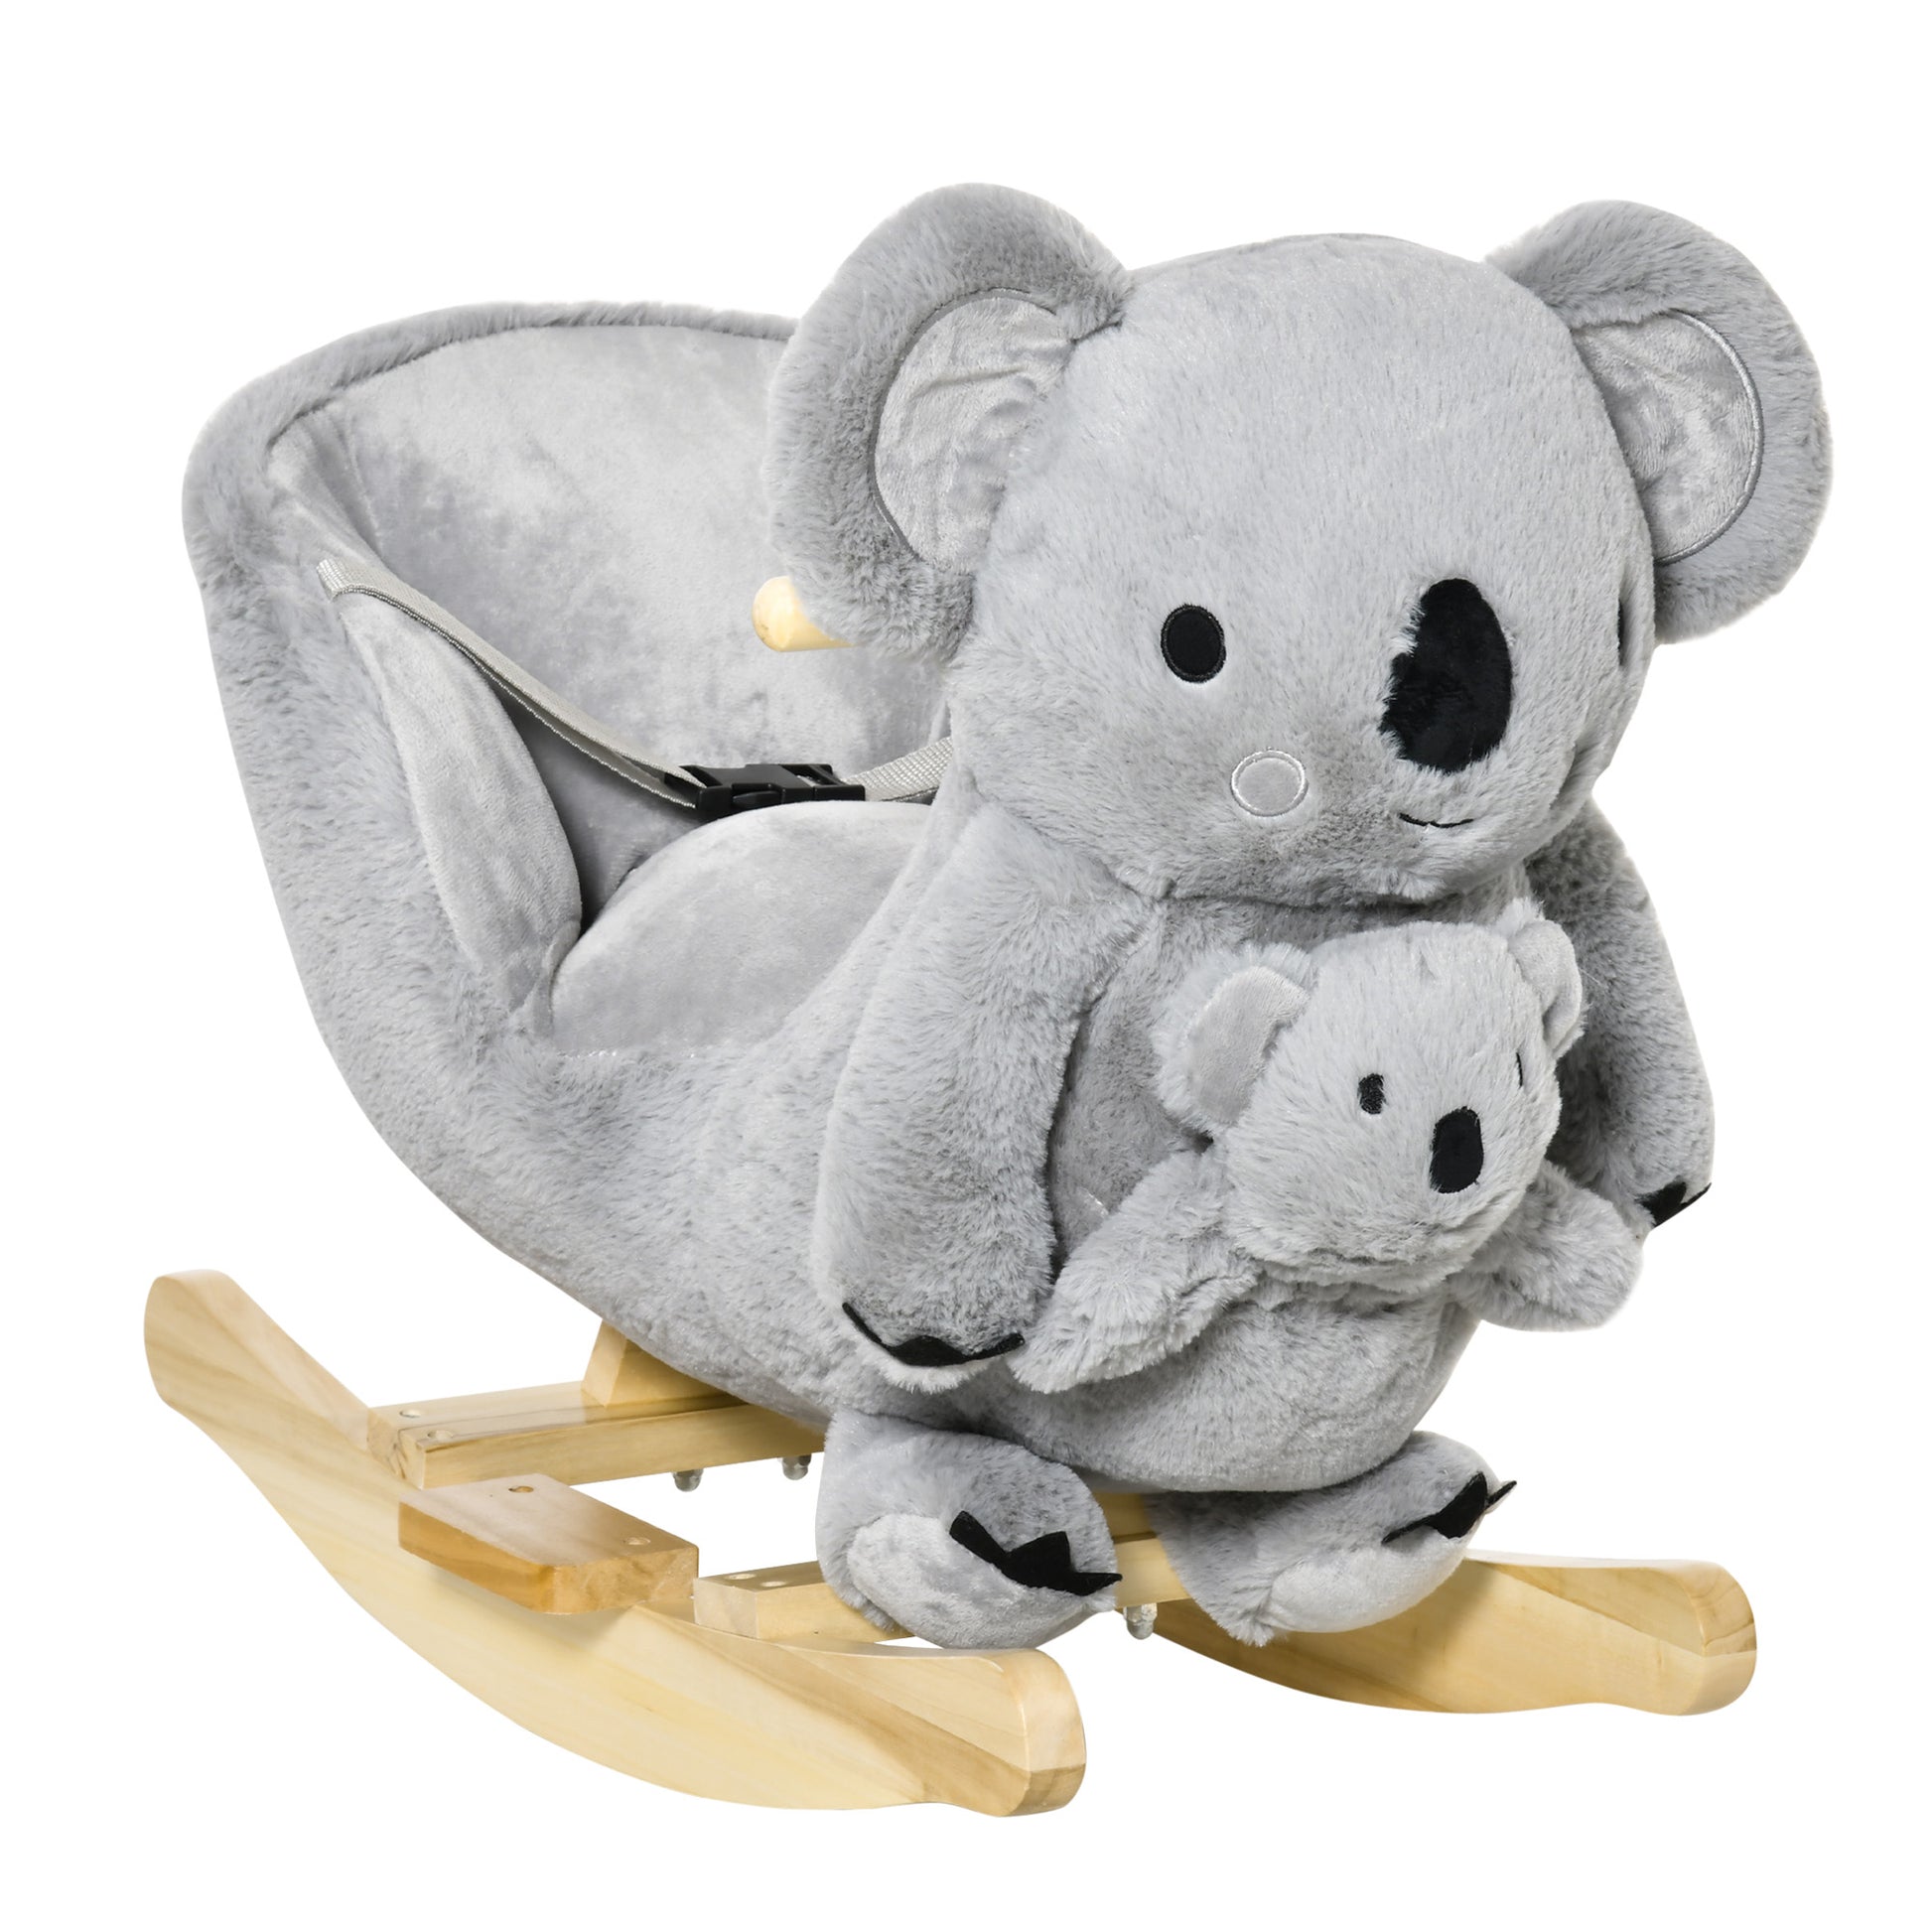 Personalised Plush Ride-On Rocking Horse Koala-shaped Toy Rocker w/ Gloved Doll Grey | Babba box.